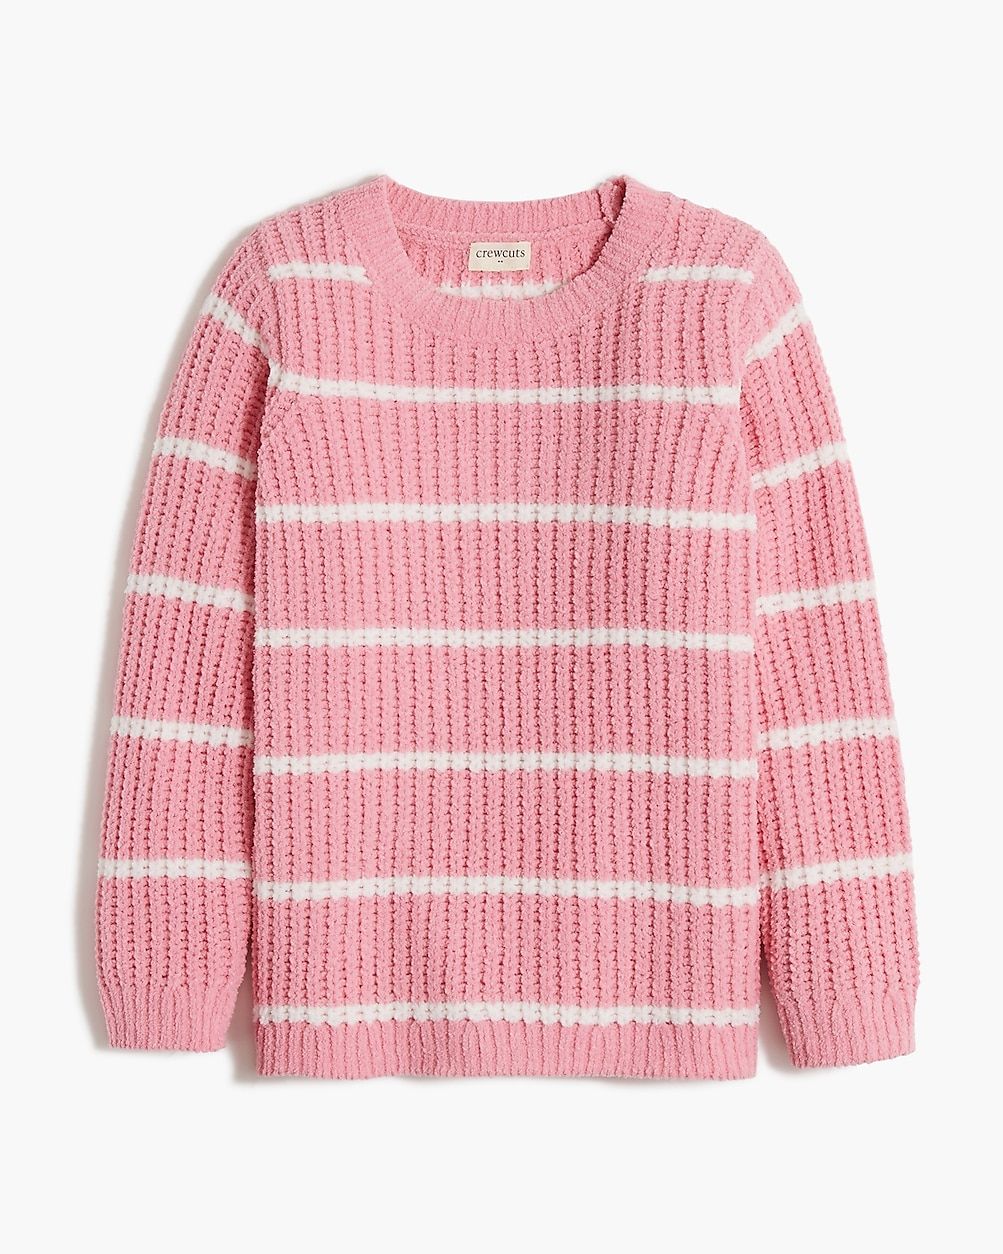 Girls' chenille striped sweater | J.Crew Factory